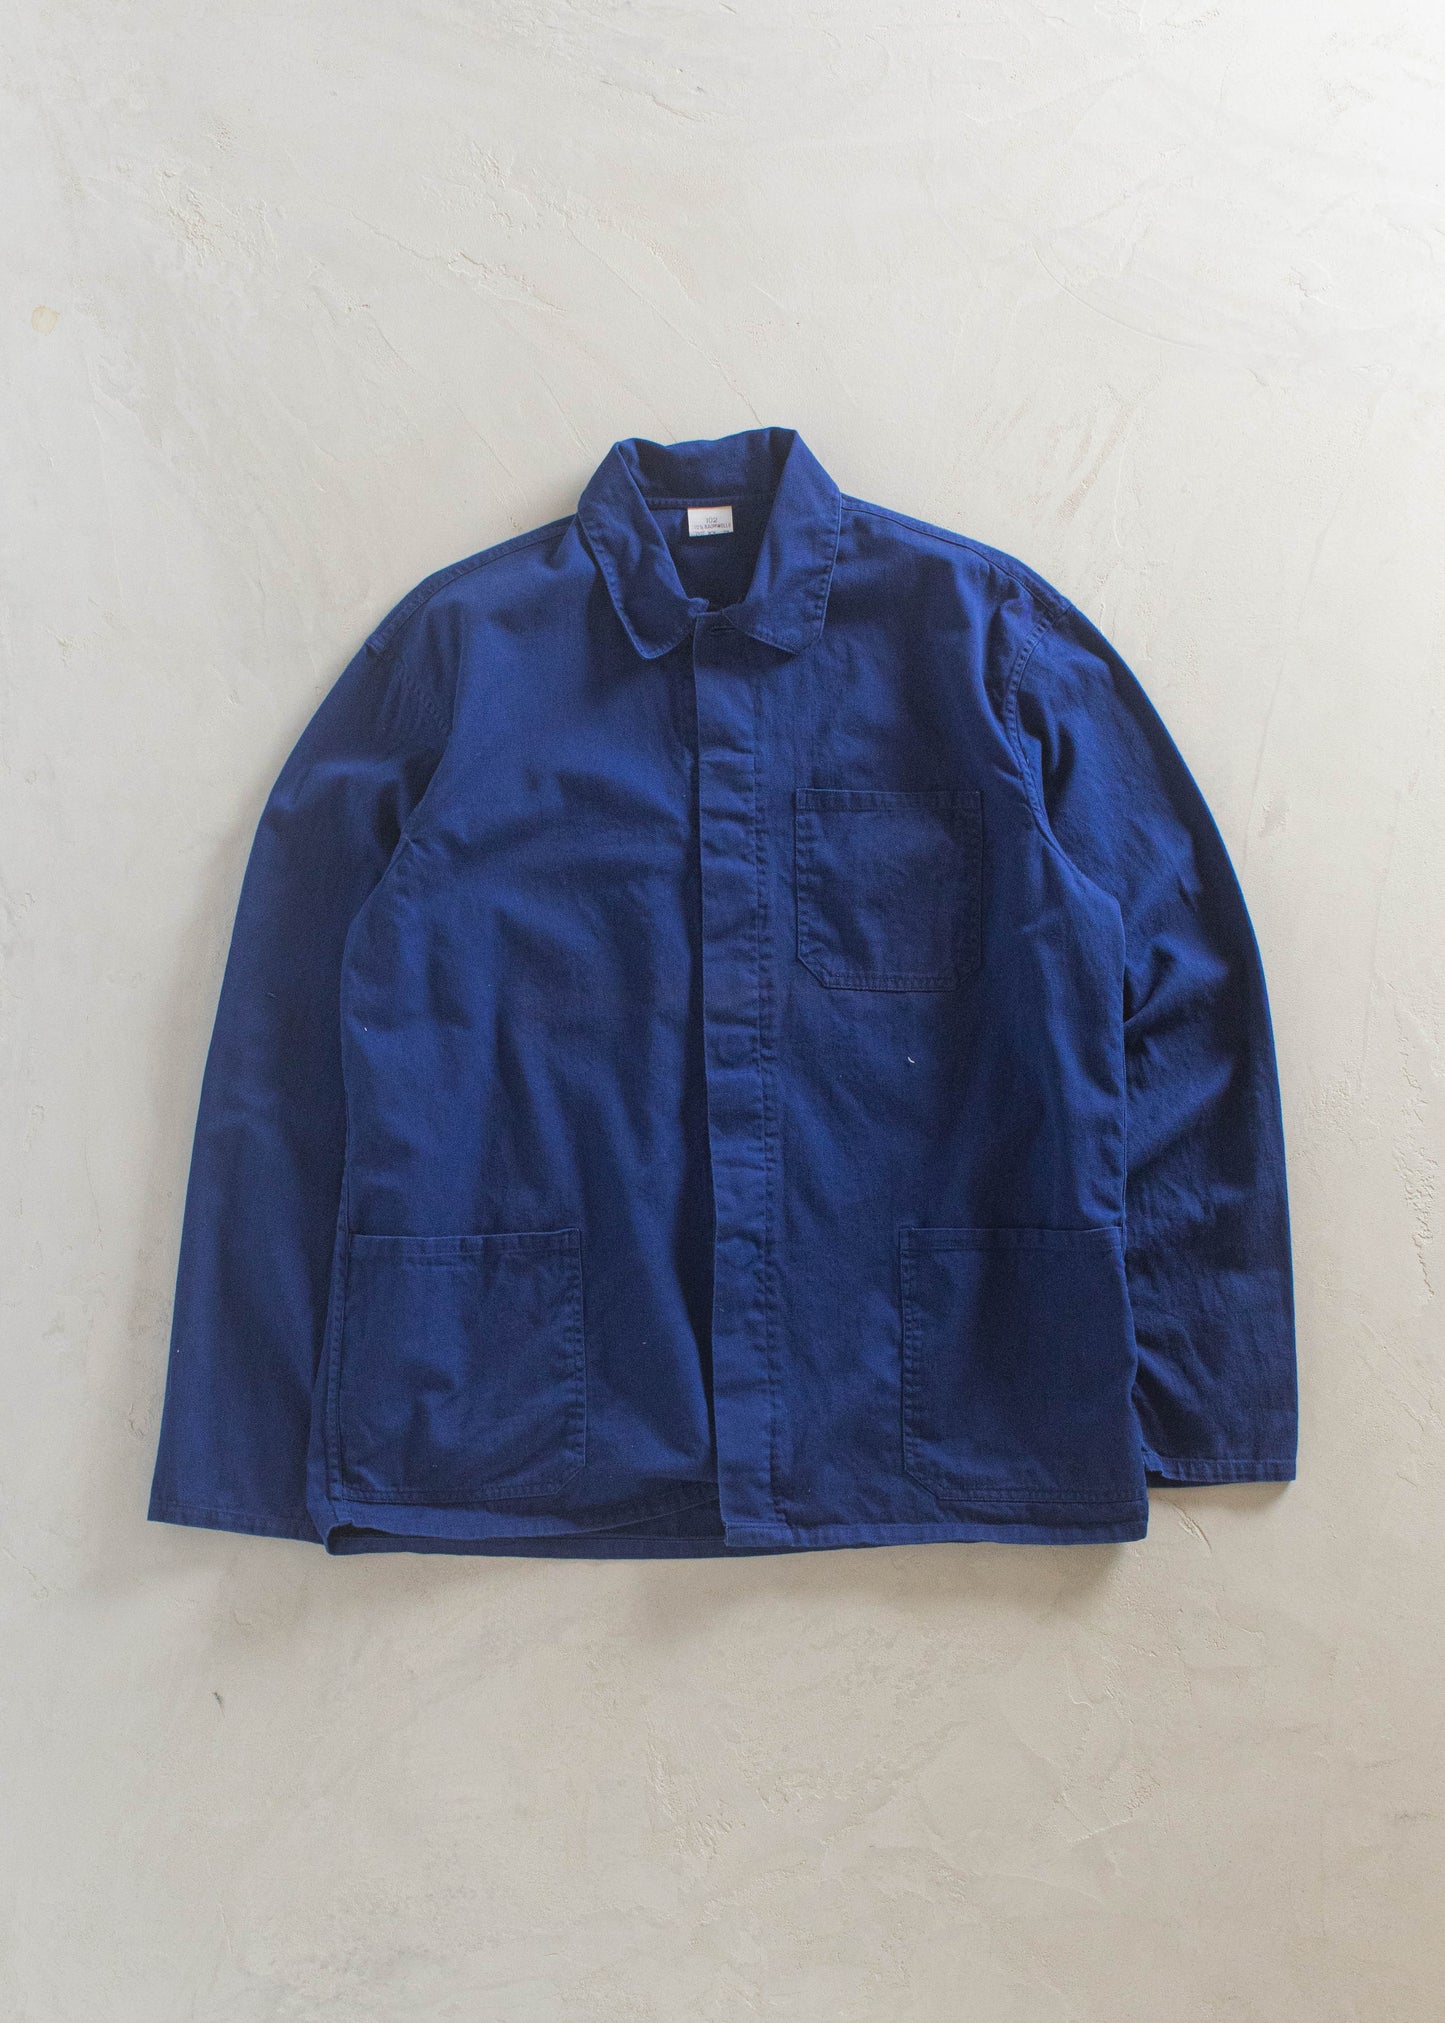 1980s European Workwear Chore Jacket Size M/L